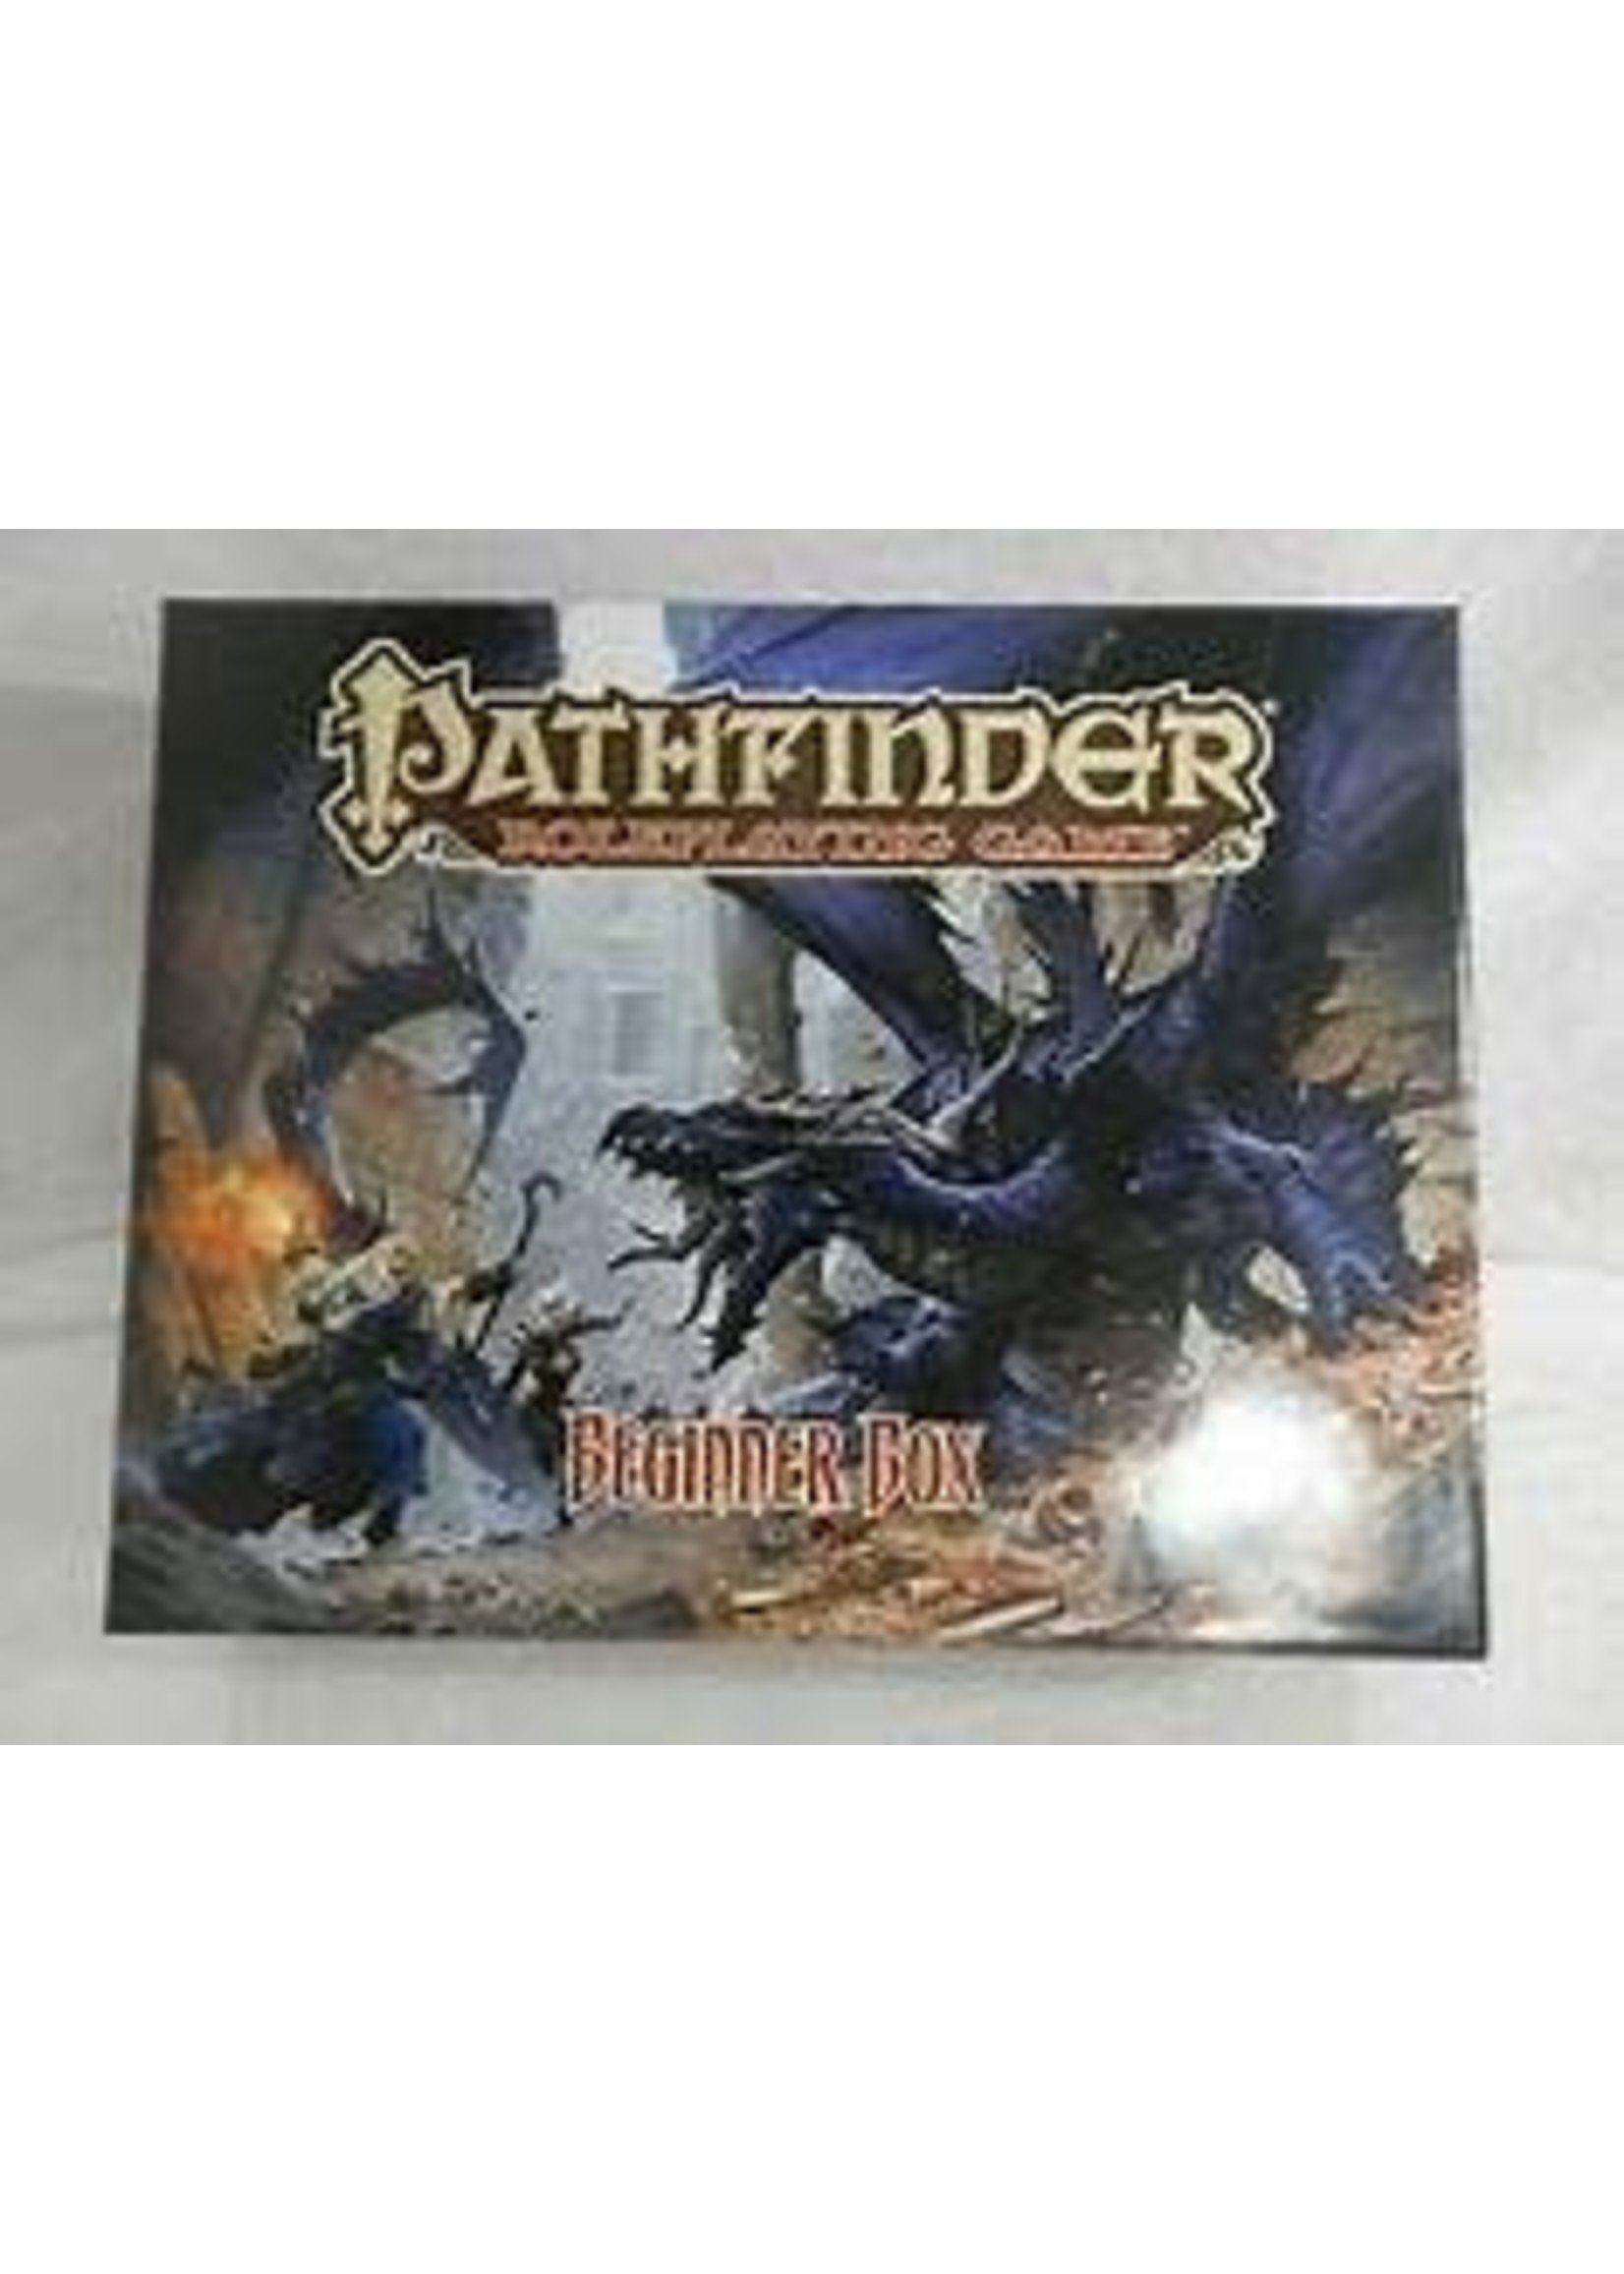 Pathfinder RPG: Beginner Box